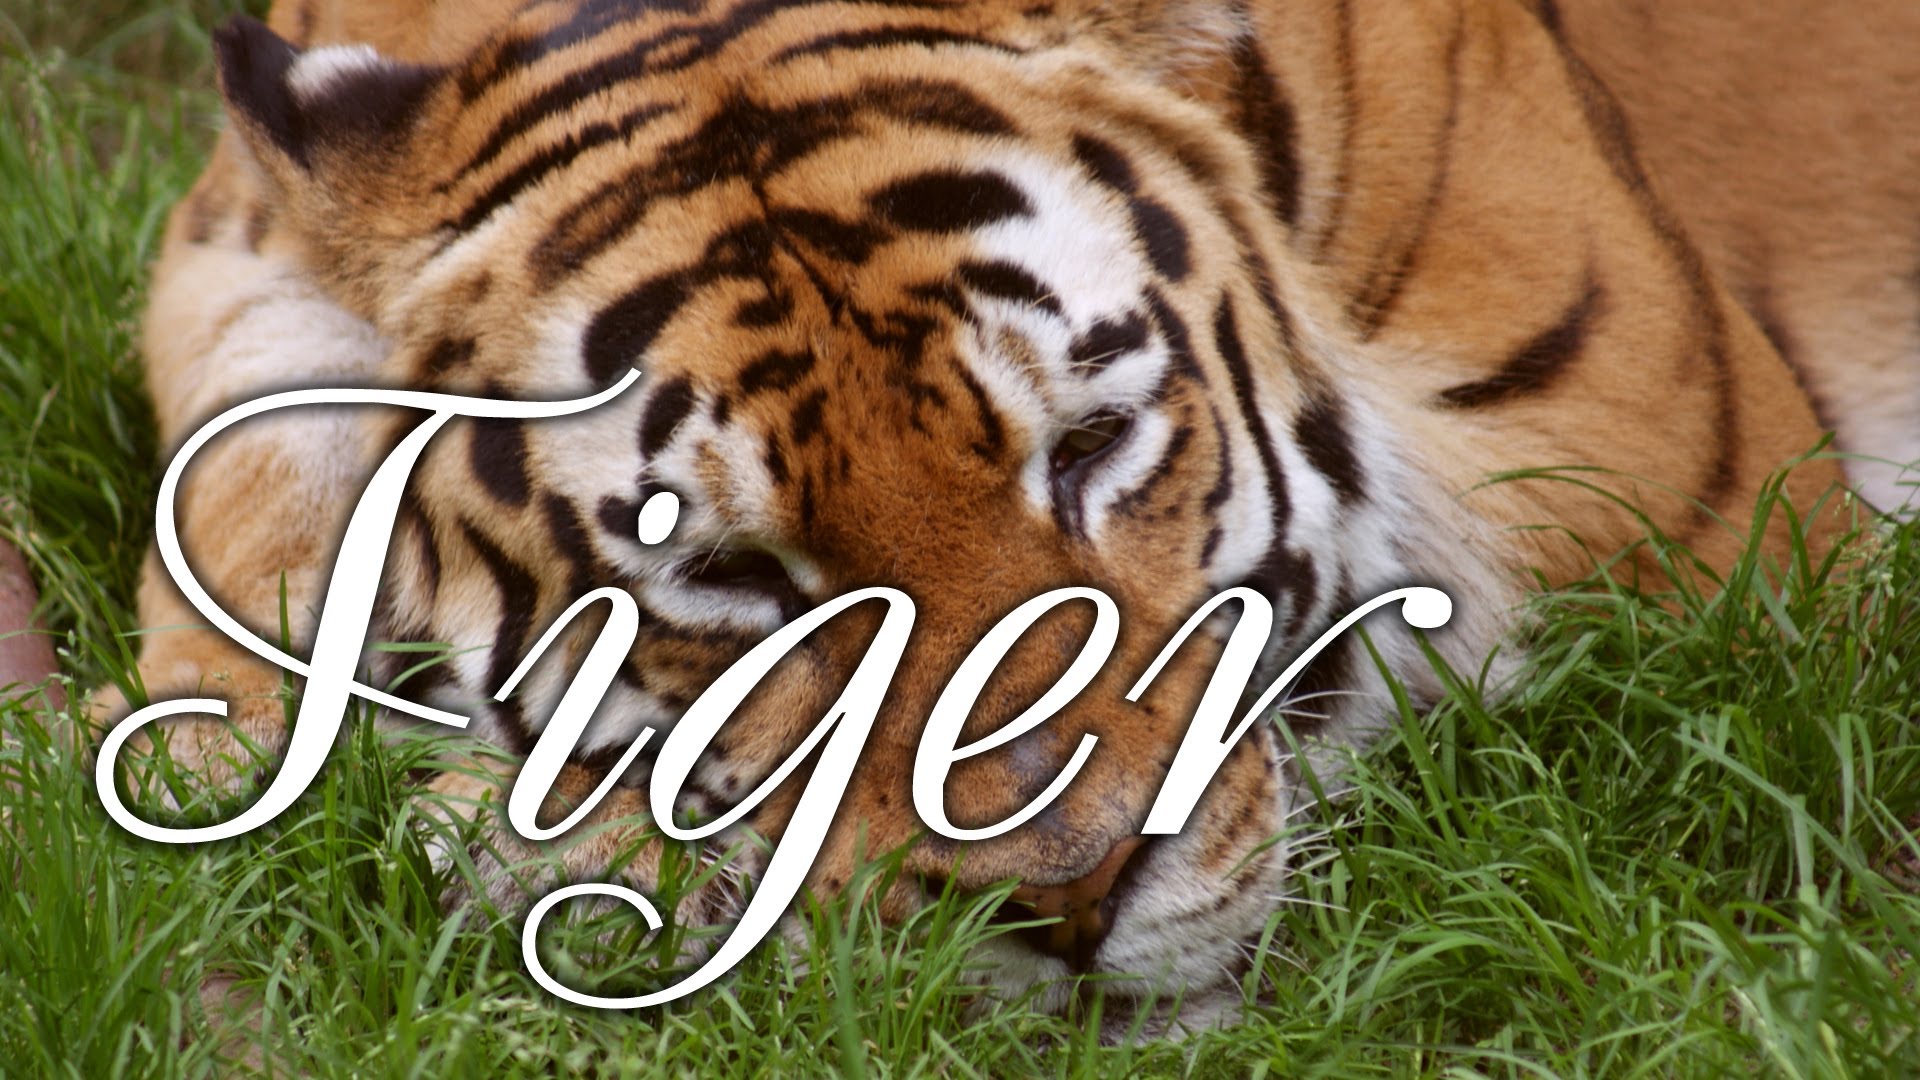 Are we pinching a sleeping tiger (Gita Daily) - YouTube